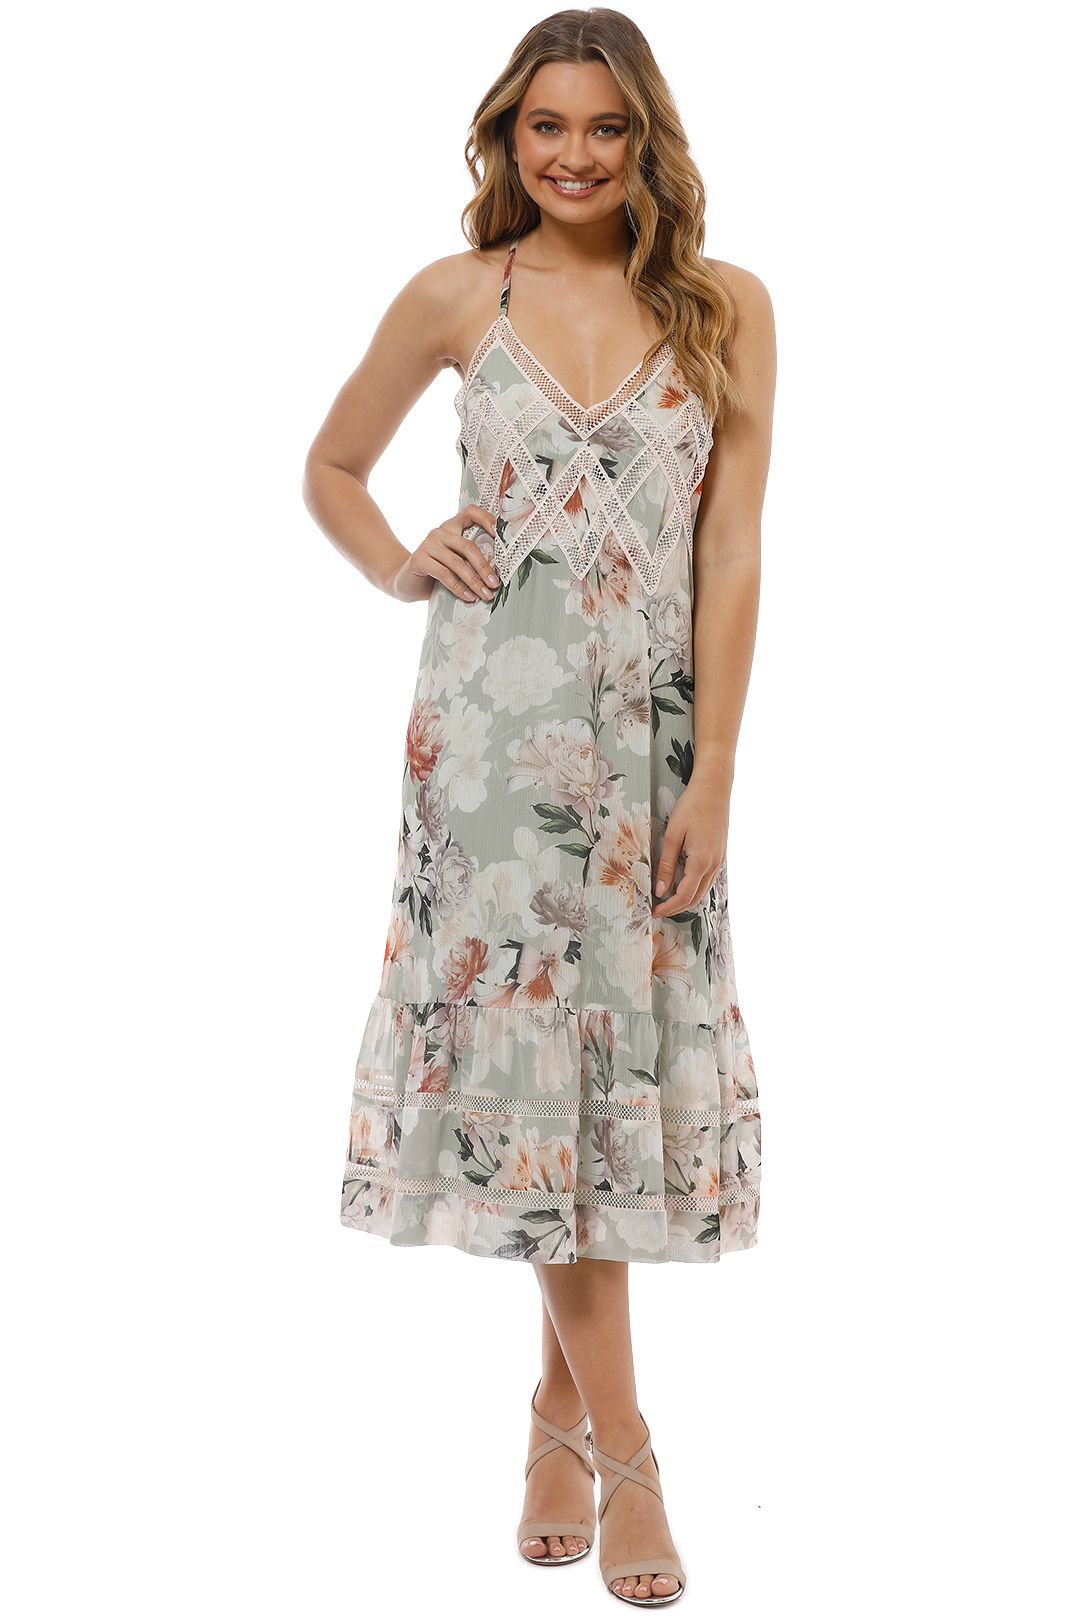 Magnolia Midi Dress by We Are Kindred for Rent | GlamCorner